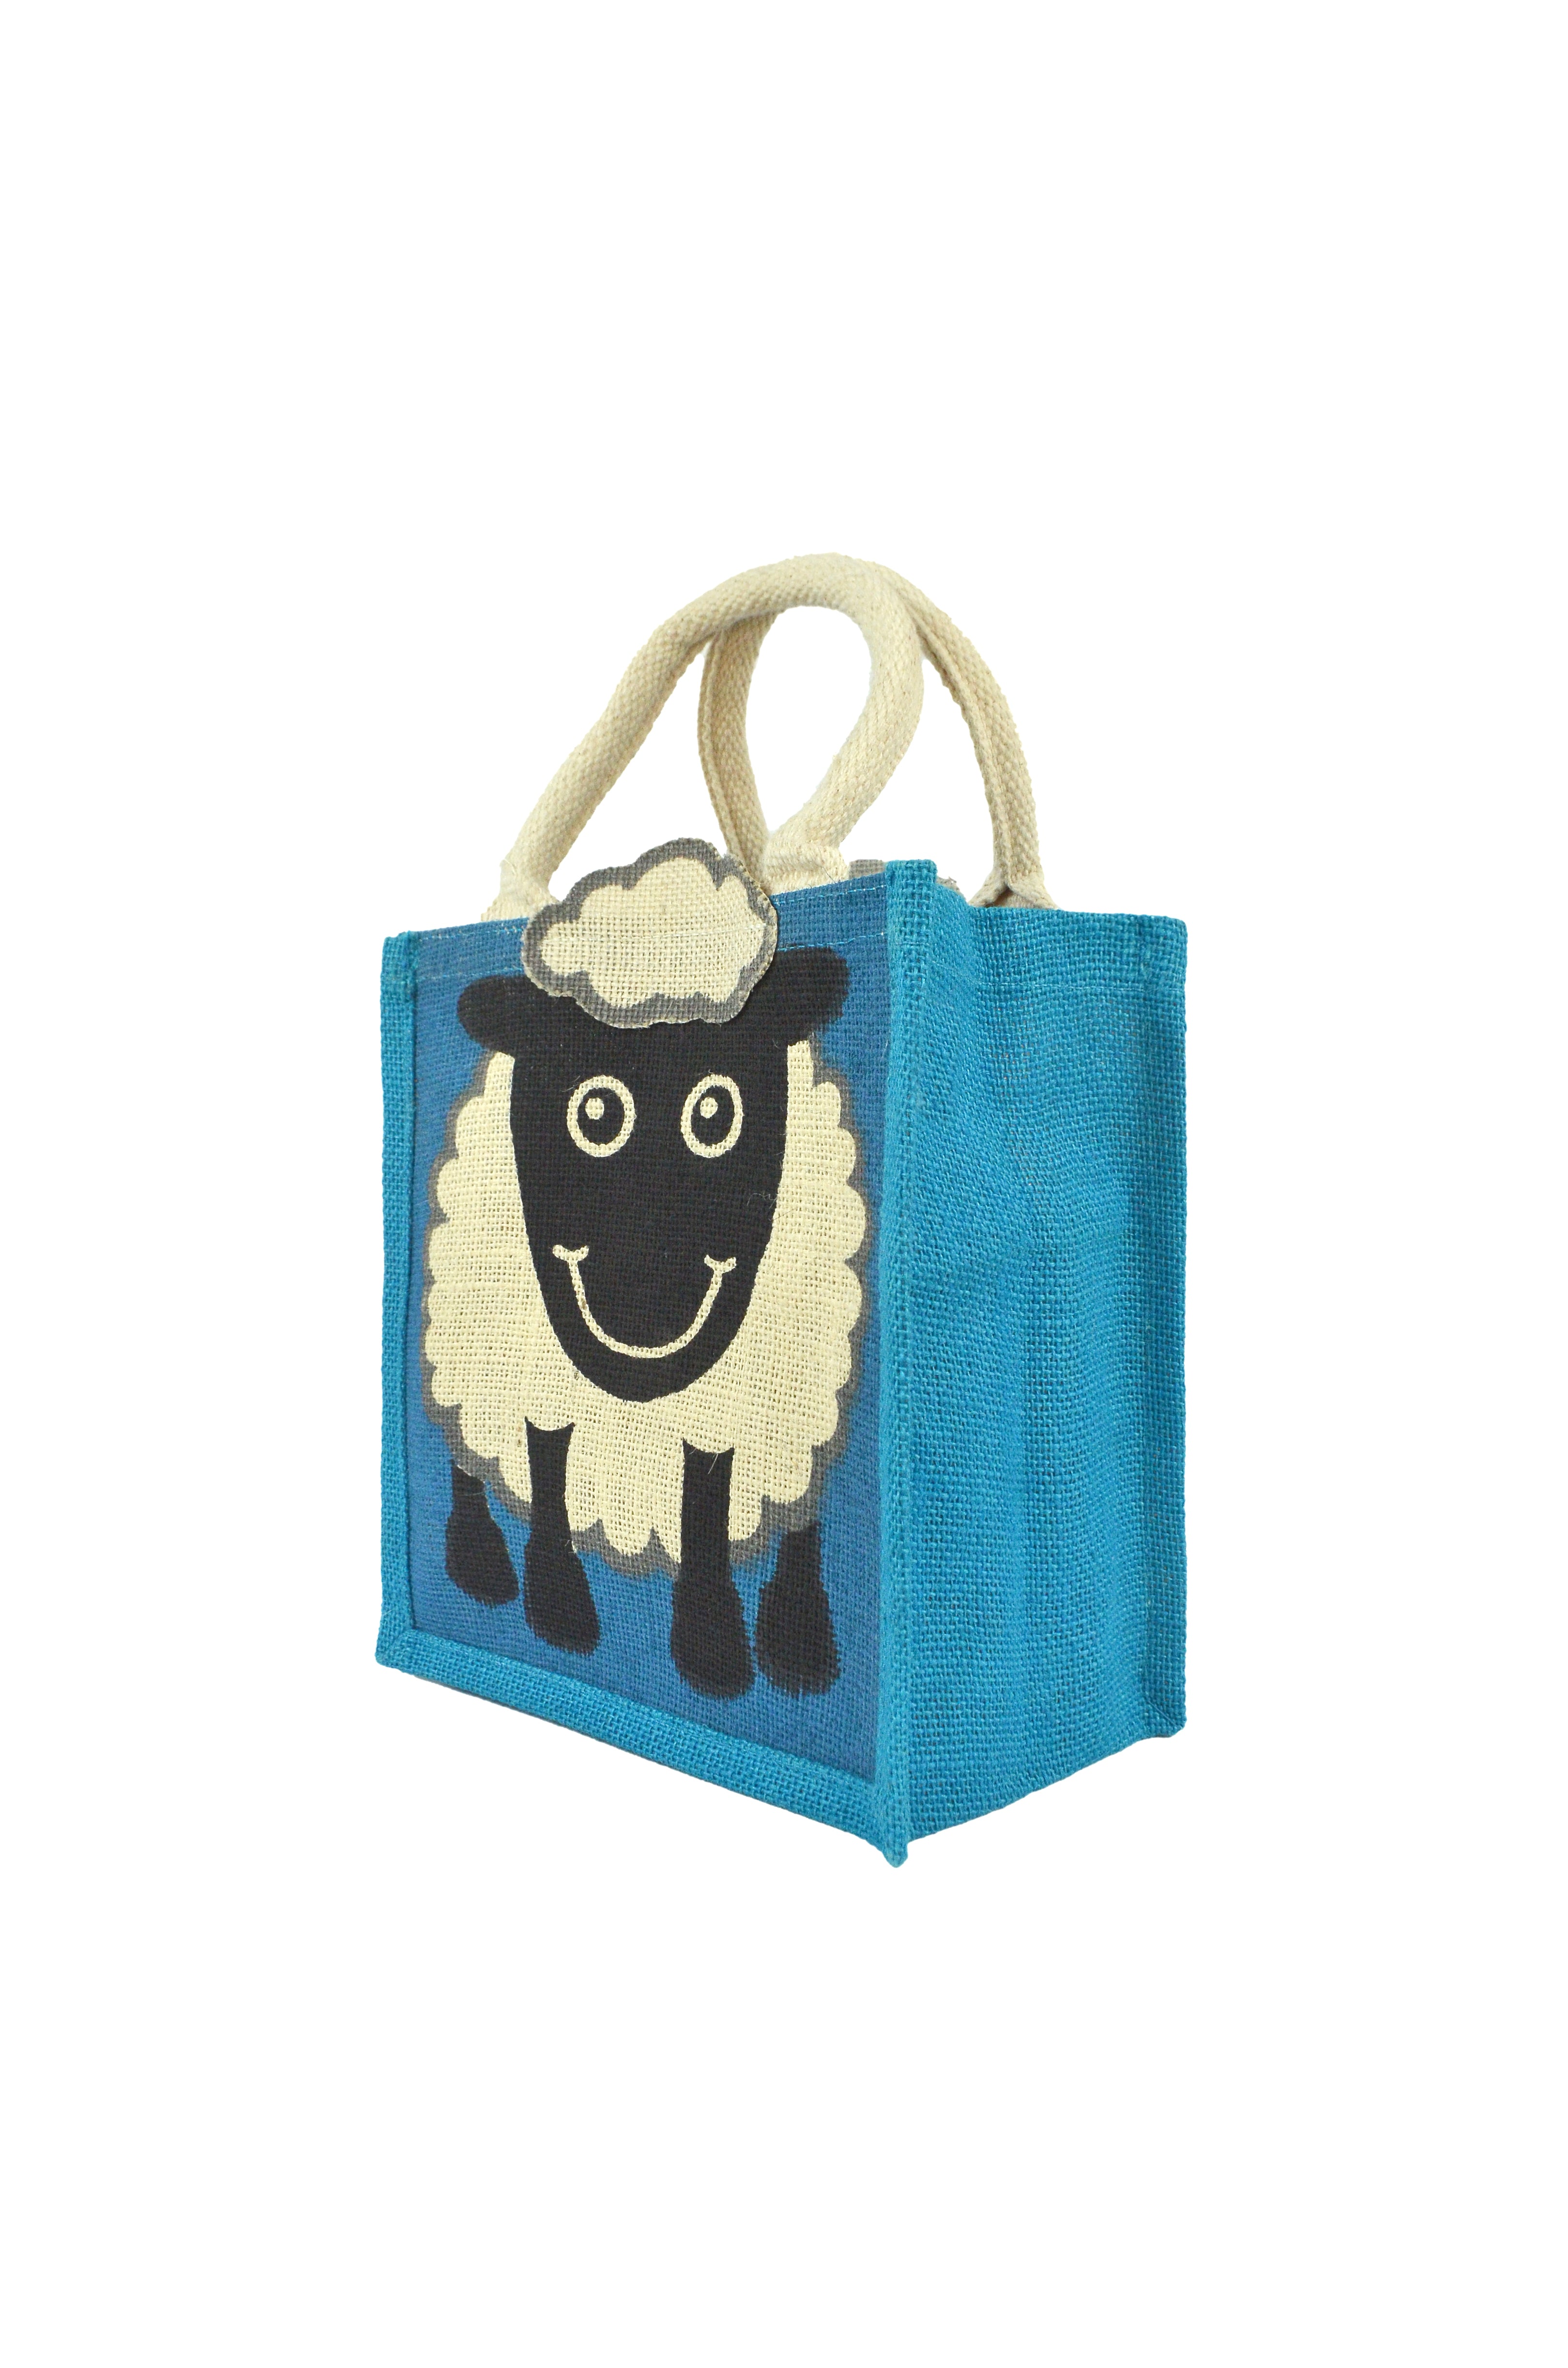 Jute Lunch Bag : Sheep Print